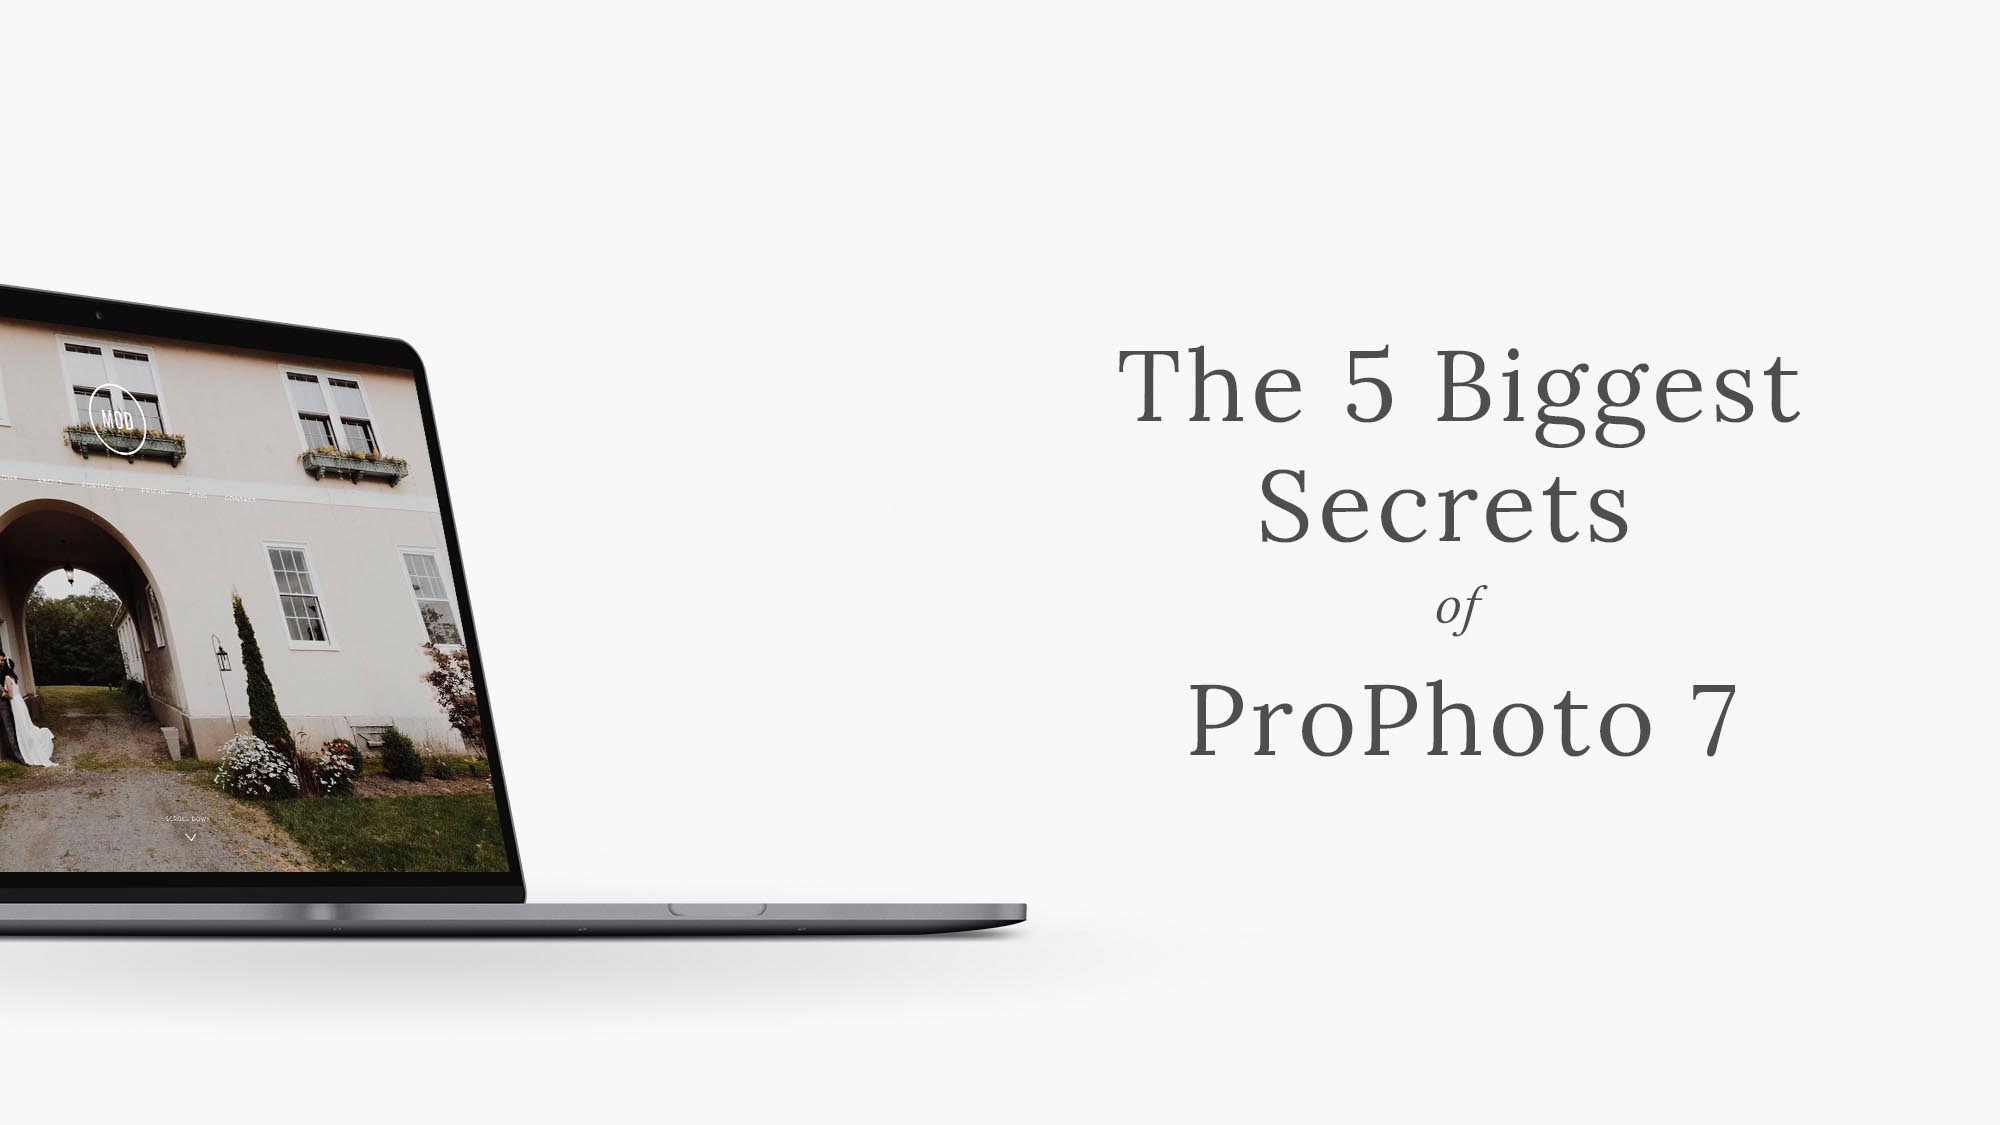 The 5 Biggest Secrets of ProPhoto 7